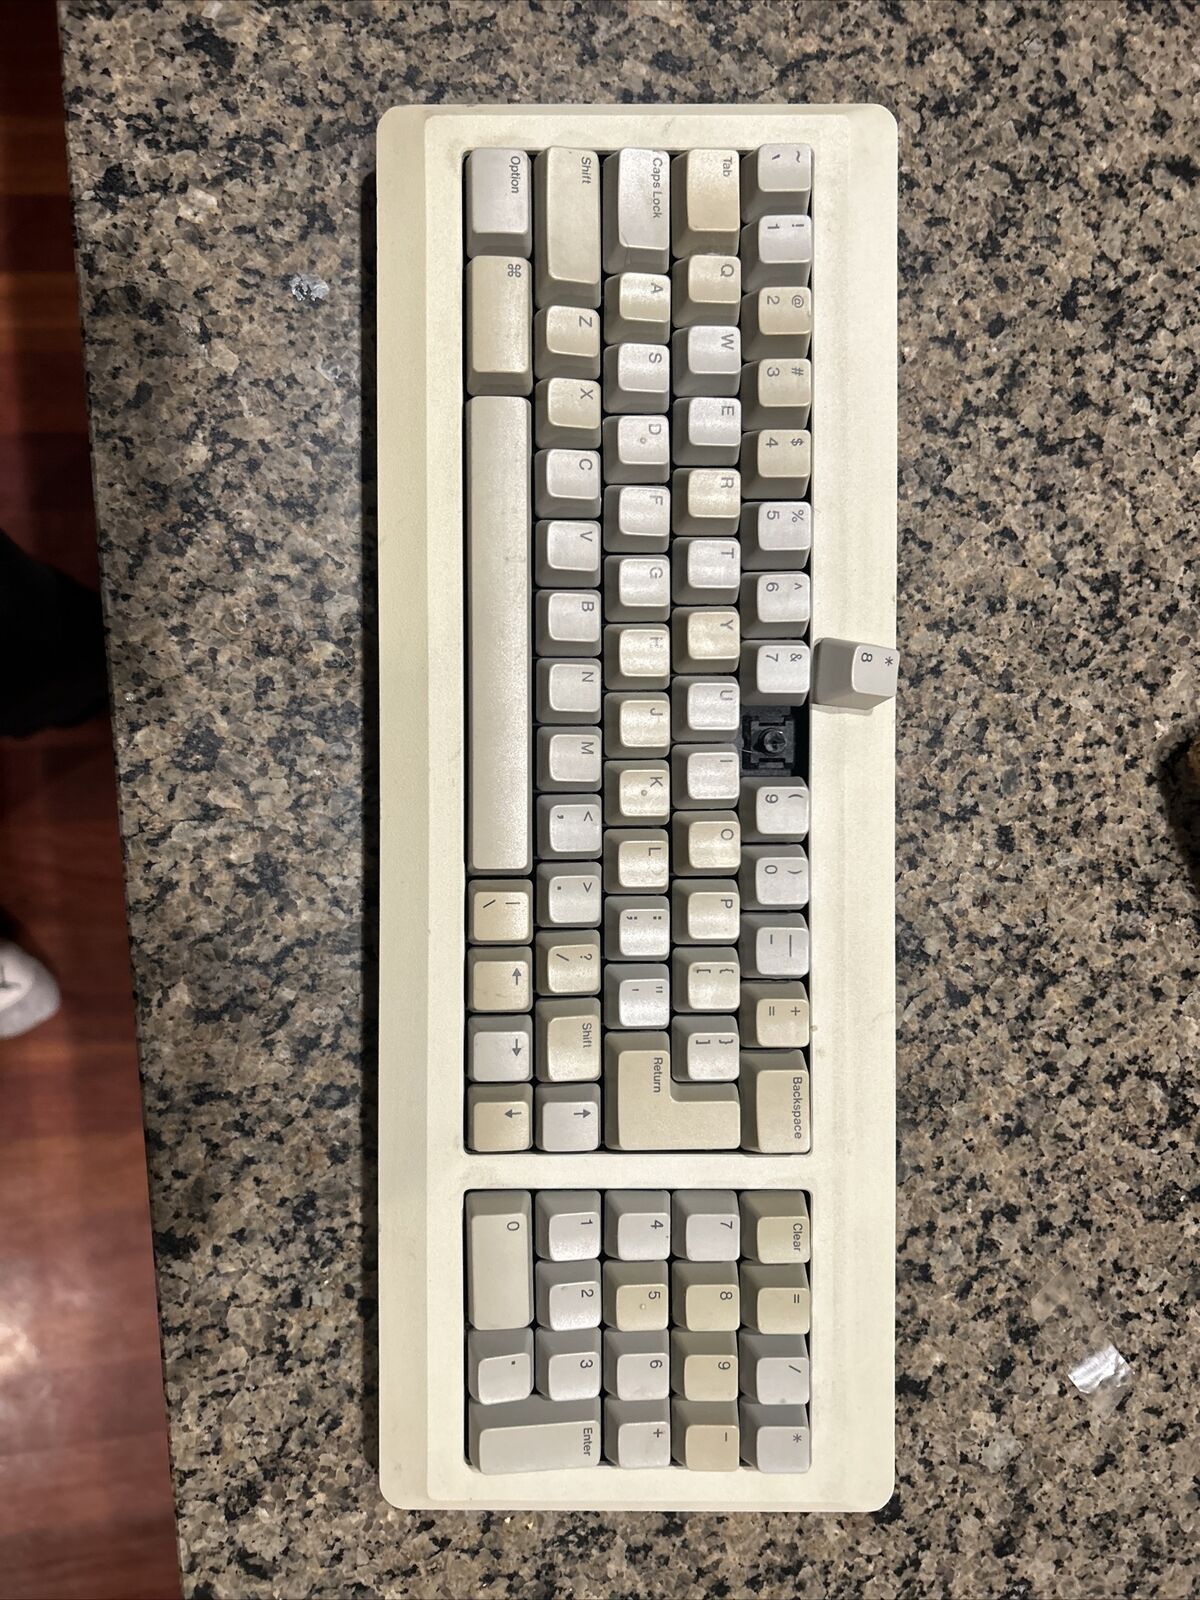 Apple M0110A Keyboard